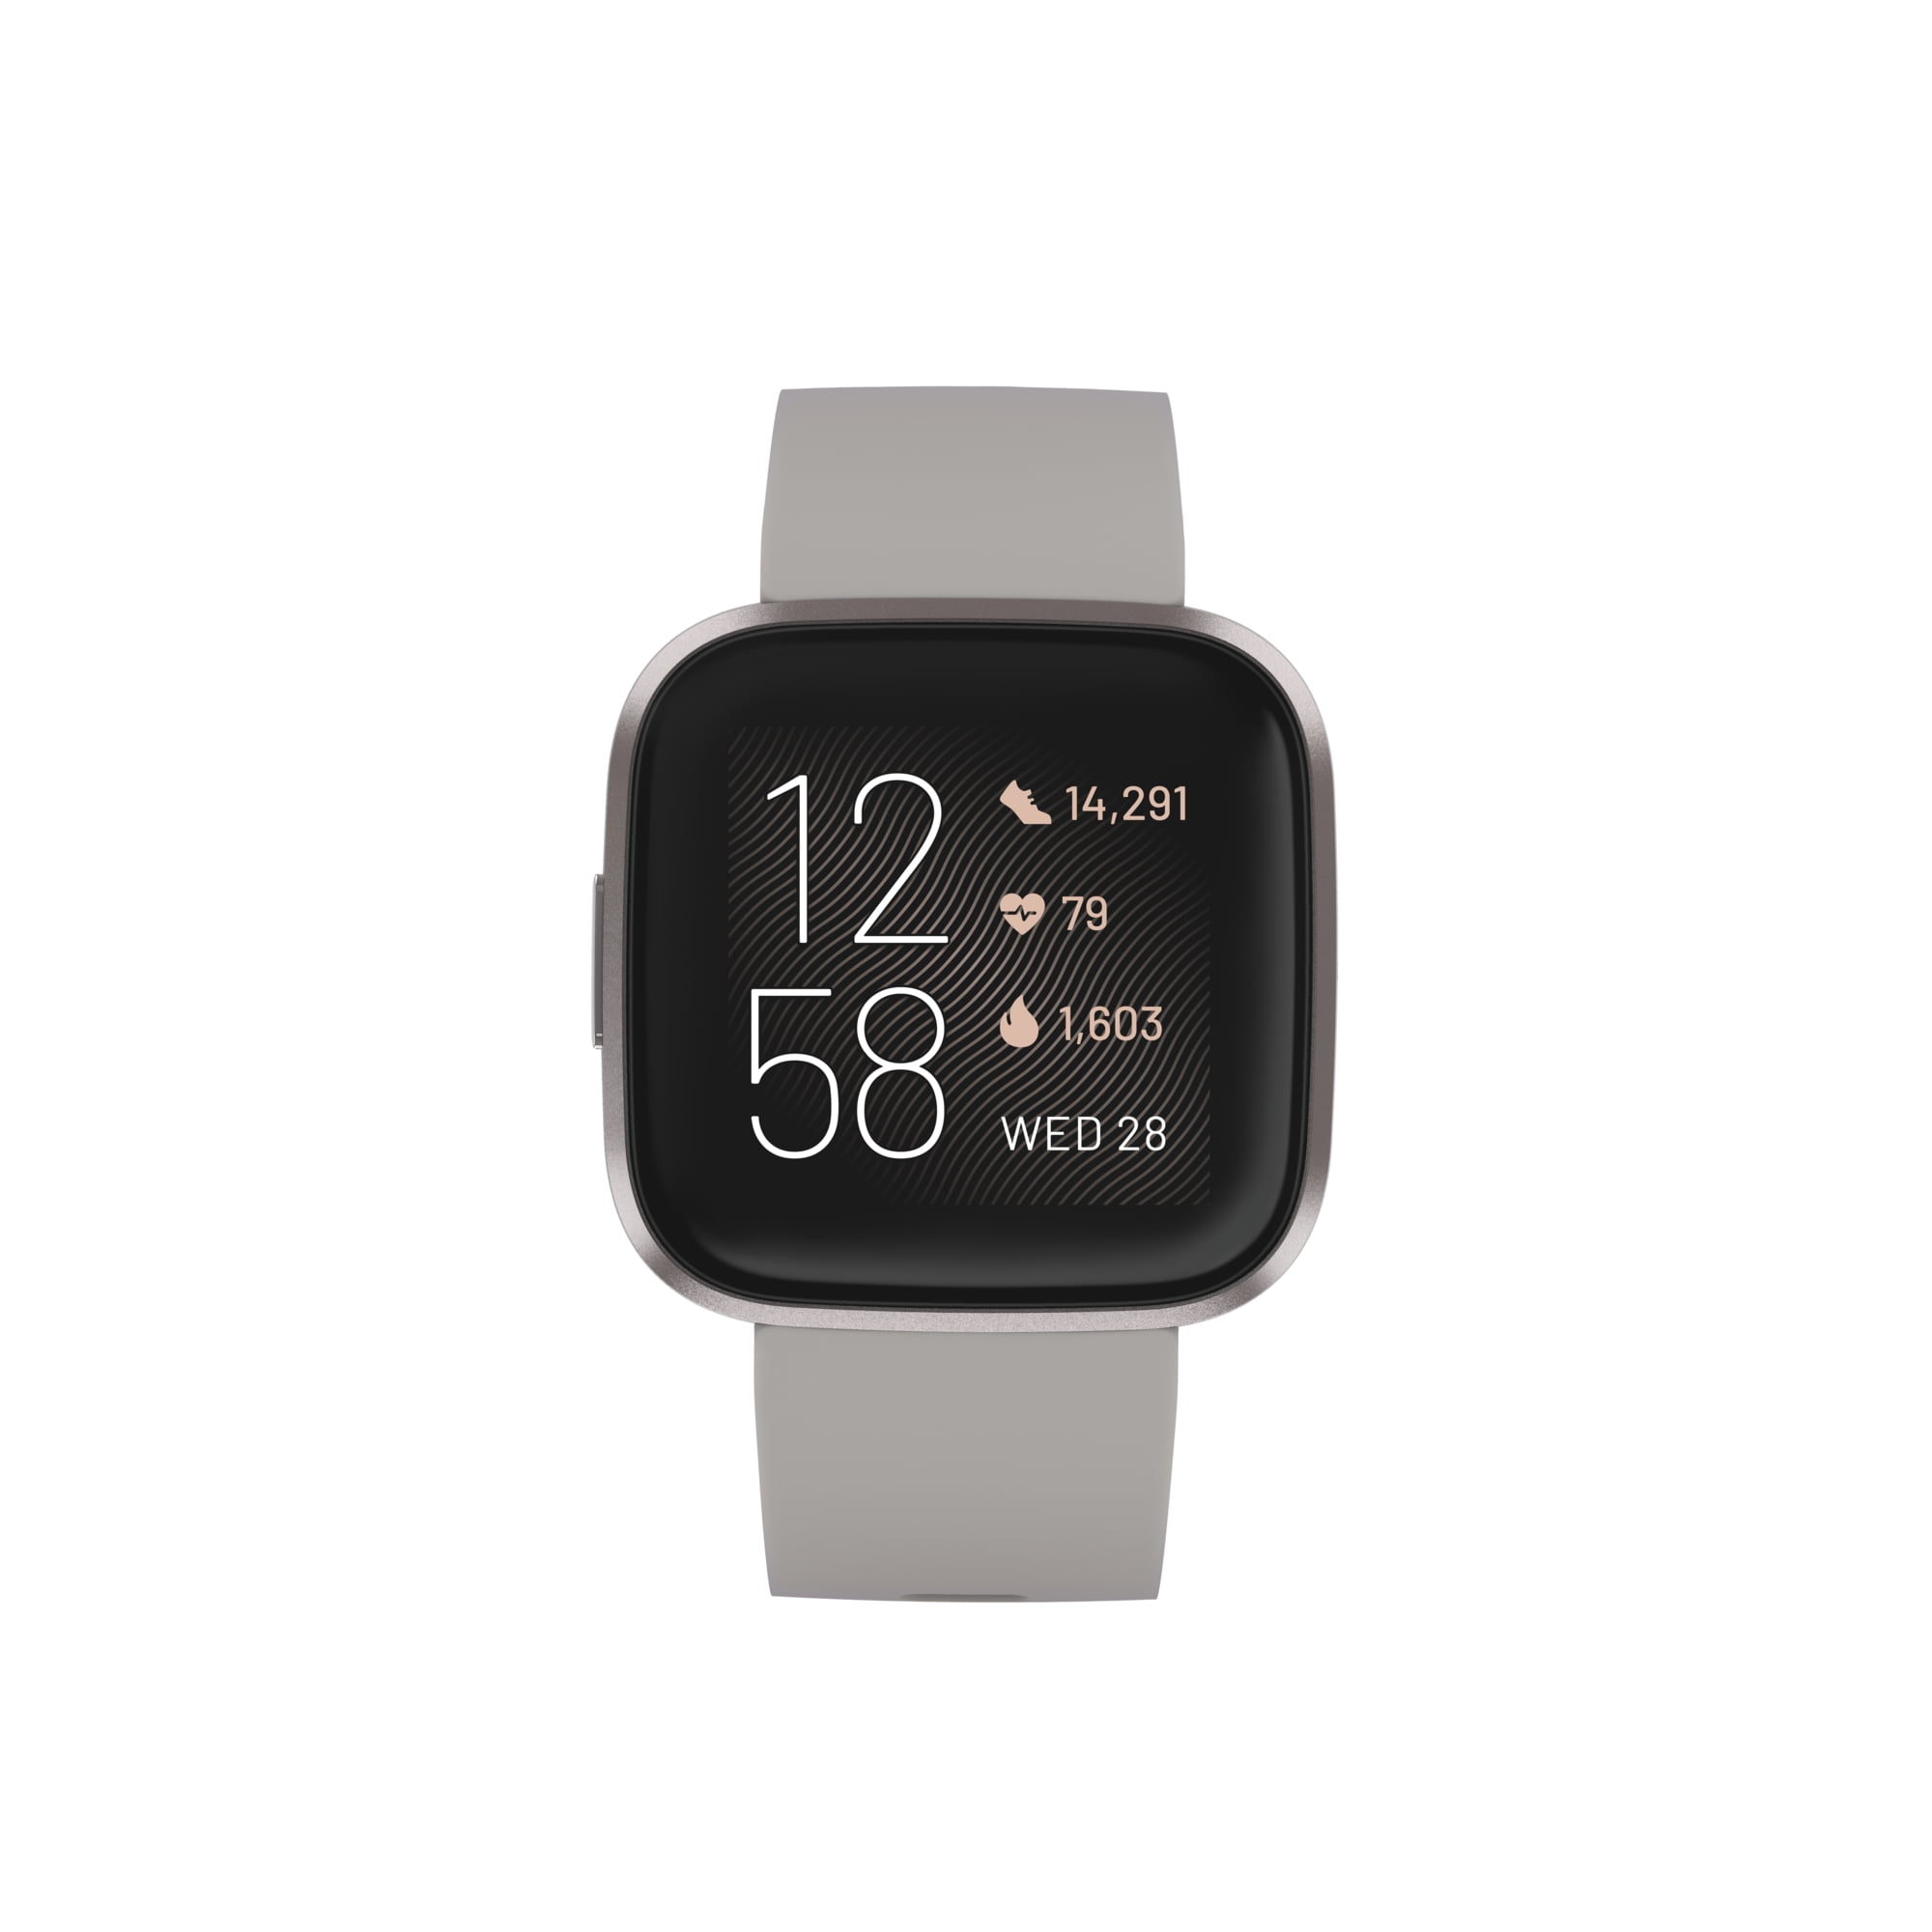 Fitbit Versa 2 Health & Fitness Smartwatch - Stone/Mist Grey Aluminum